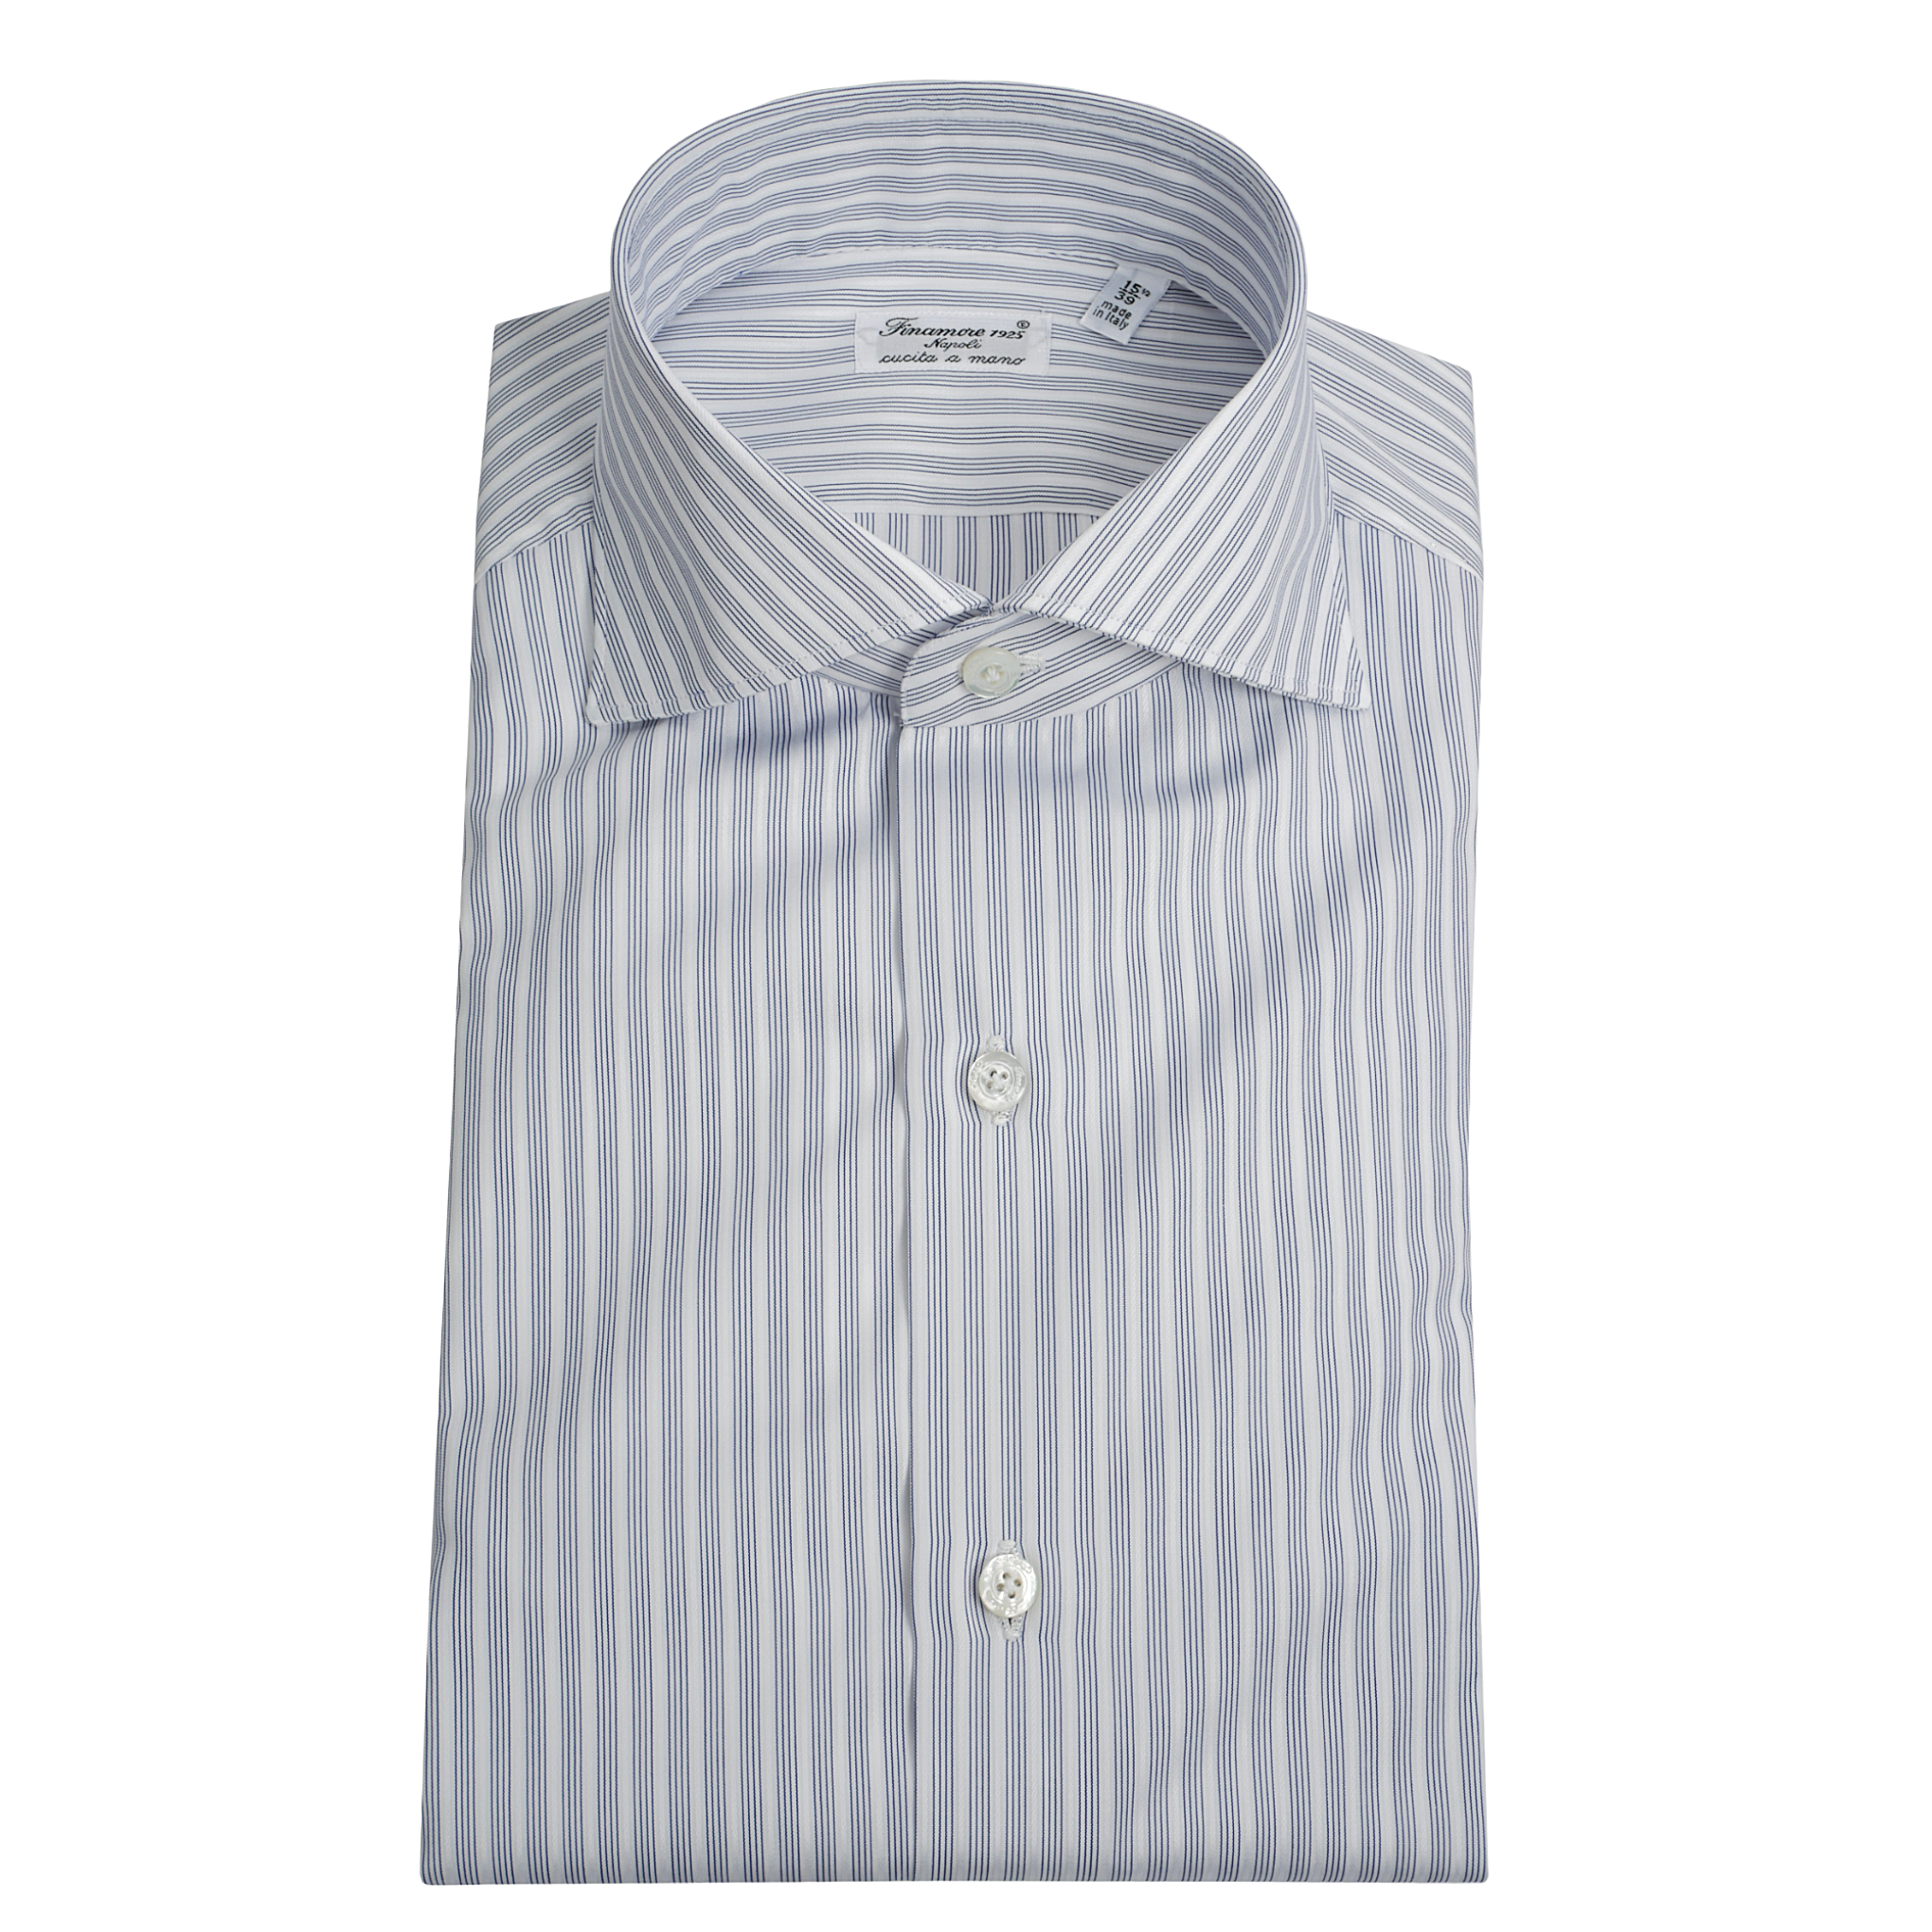 Classic Milano slim fit shirt in white and blue multi stripe cotton